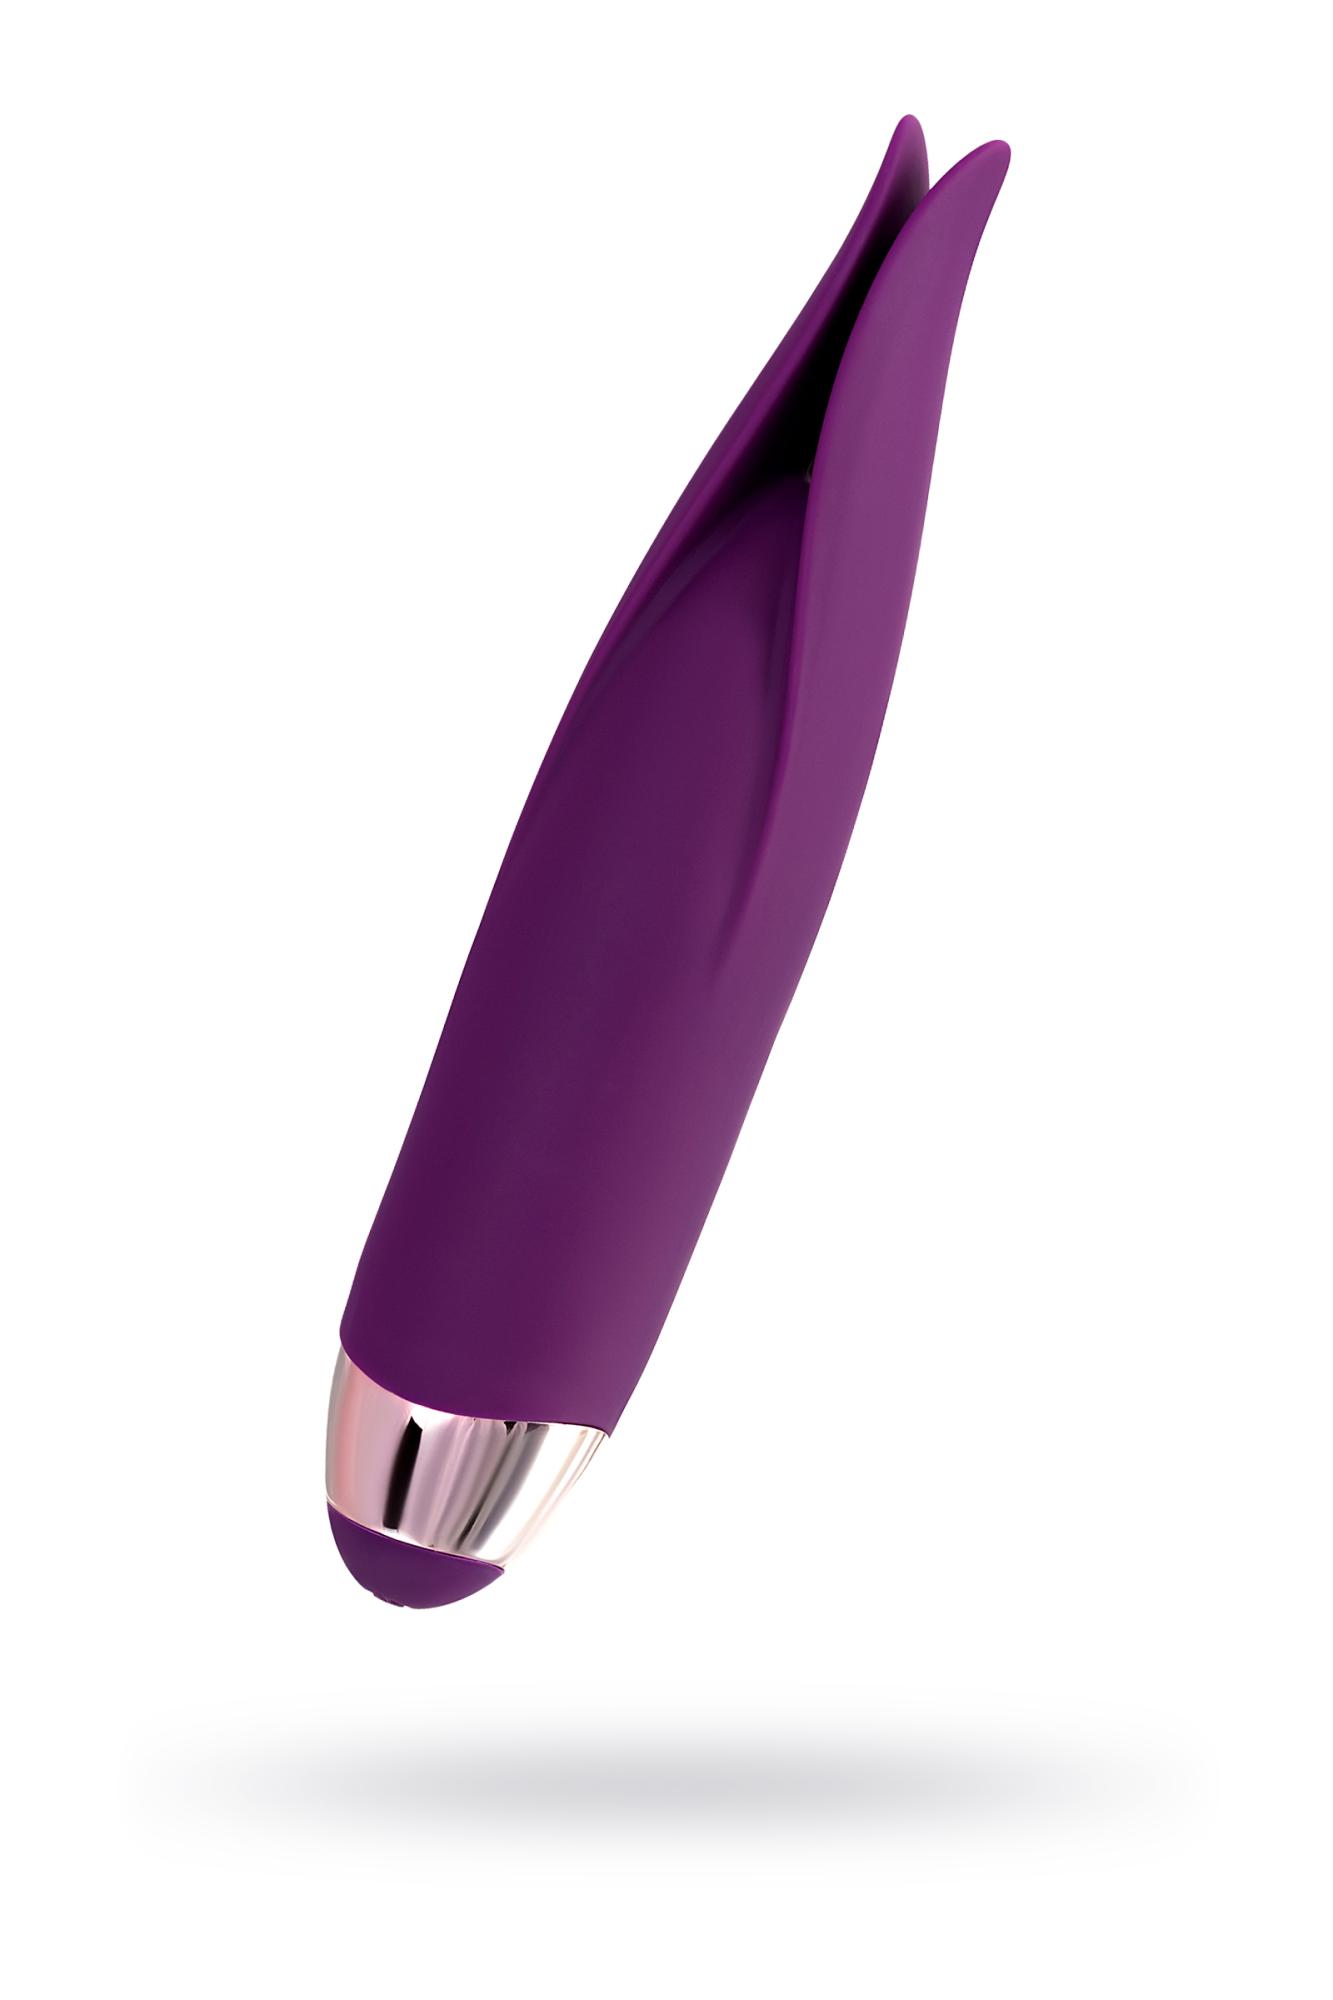 L'EROINA by TOYFA Flo - Вибростимулятор, 18,5 см (фиолетовый)